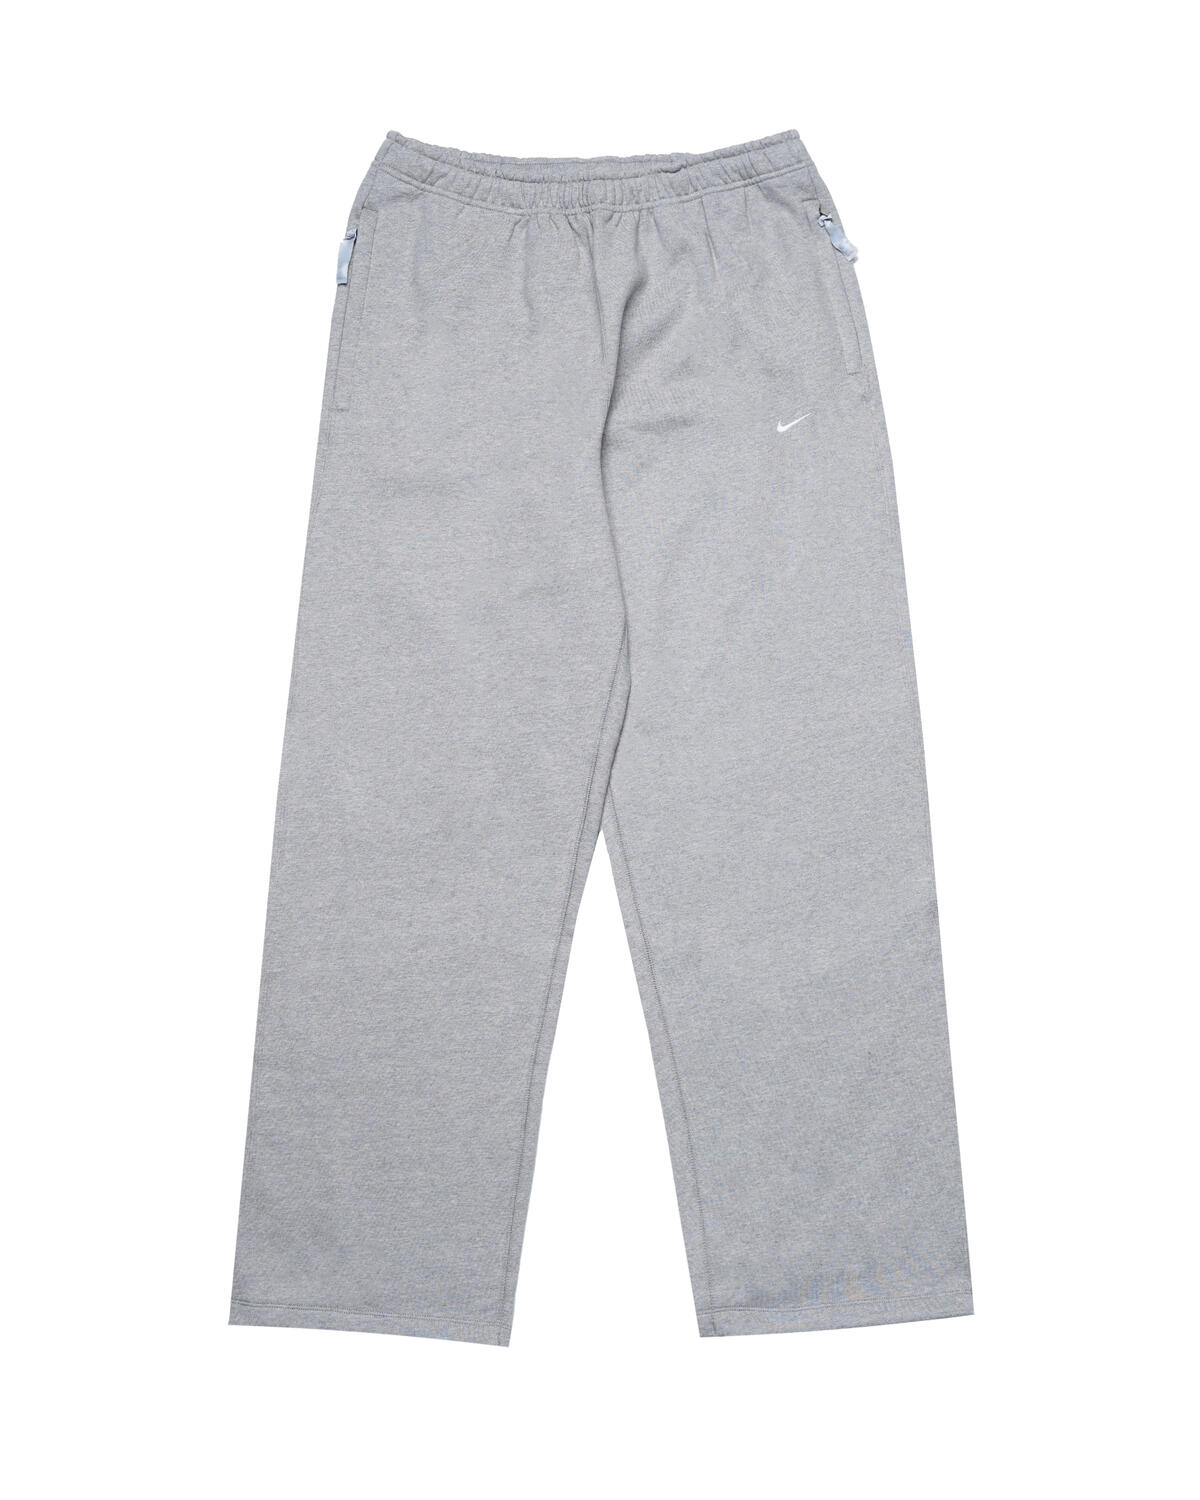 Gray Solo Swoosh Lounge Pants by Nike on Sale